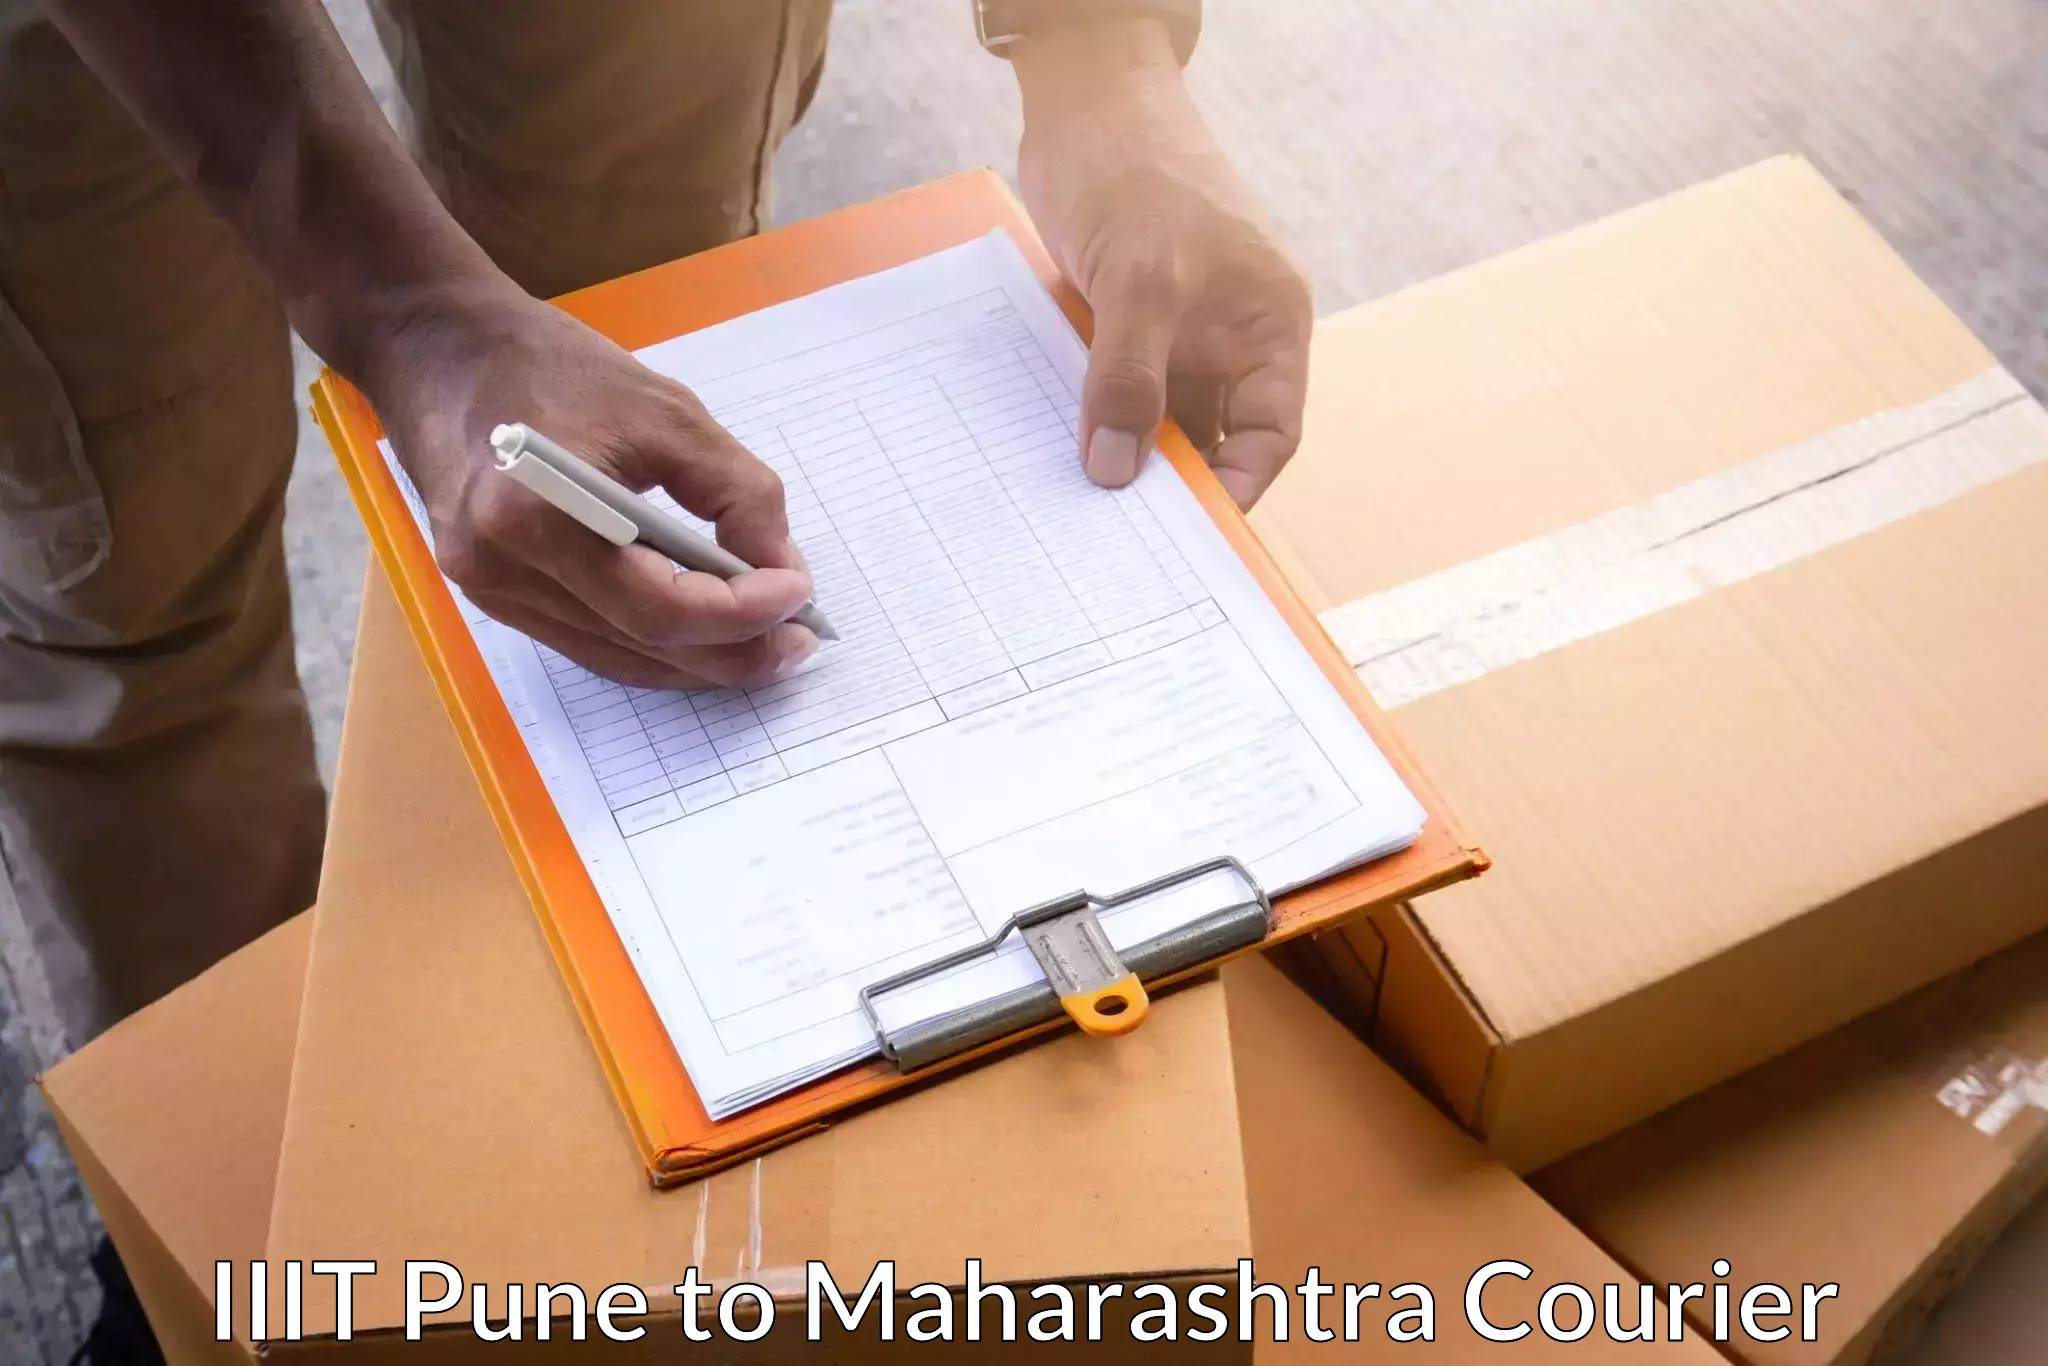 Global shipping networks IIIT Pune to Maharashtra